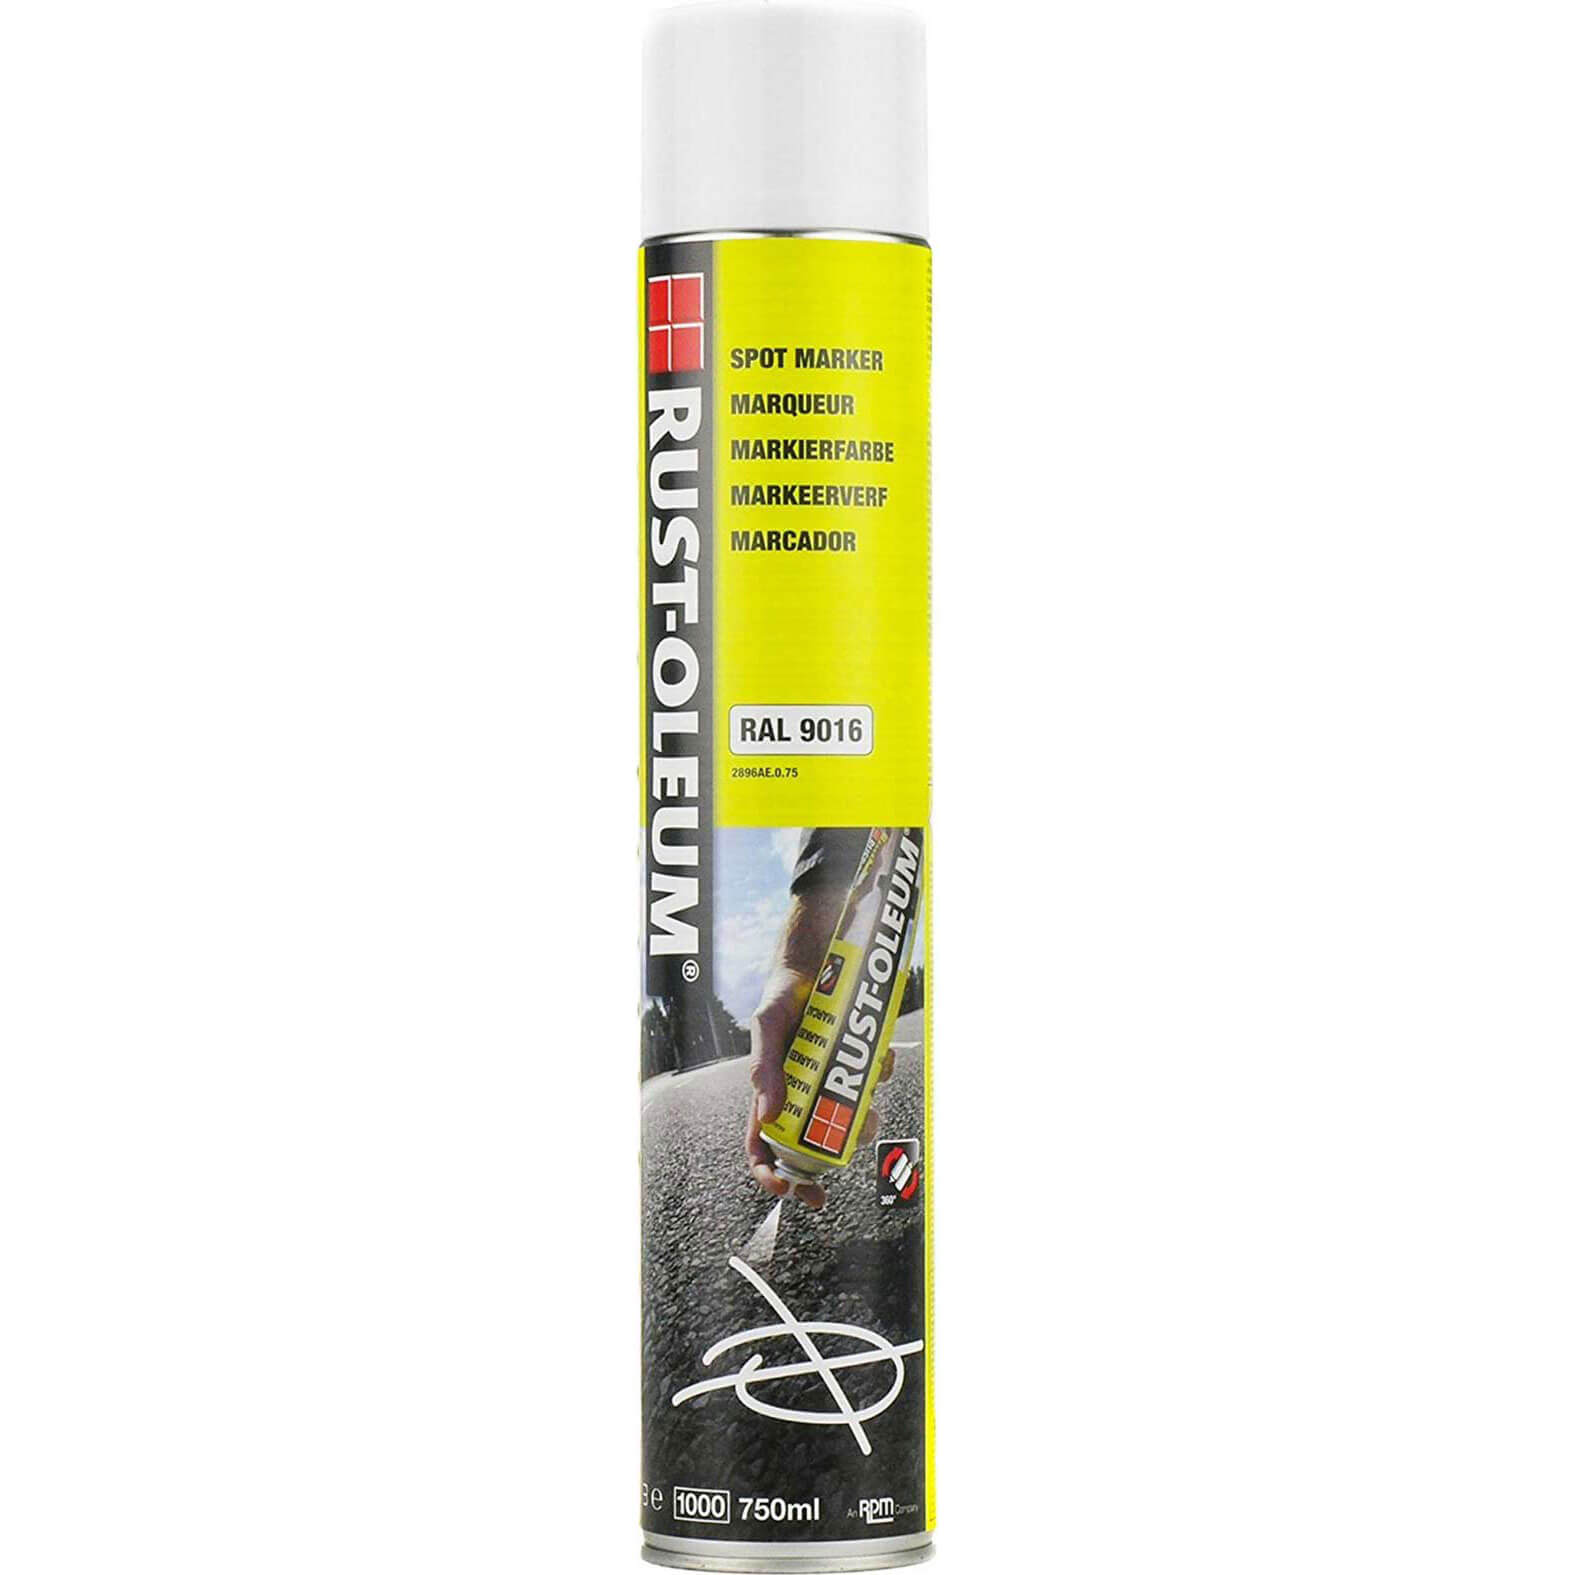 Image of Rust Oleum Ground Marker Spray Paint White 750ml